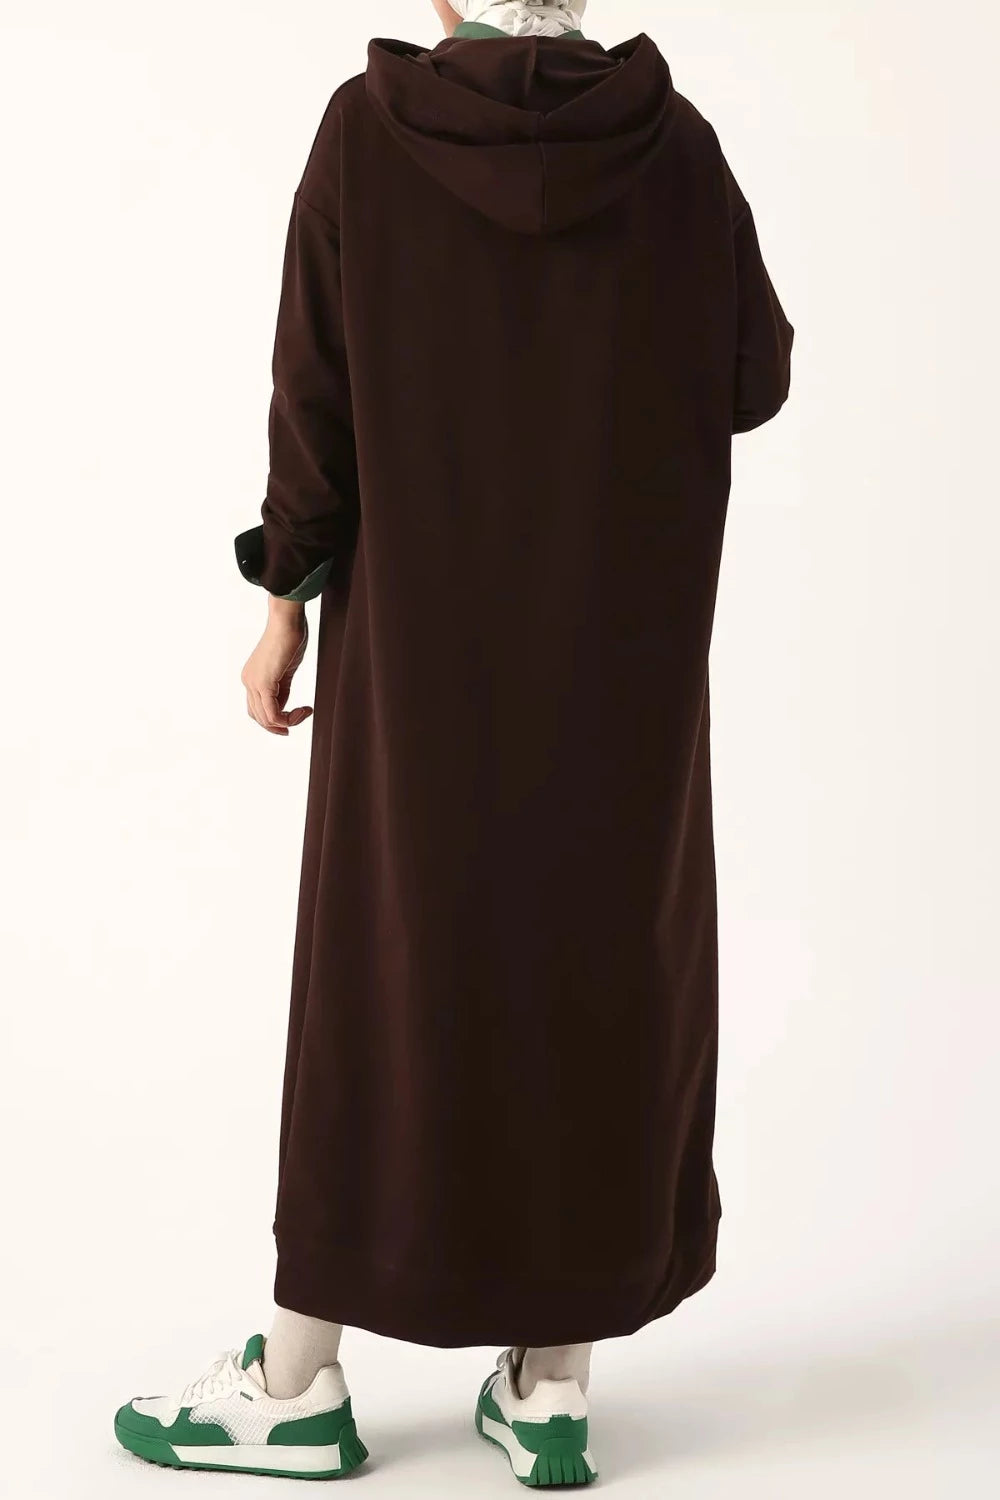 Sara Modest Hooded Chic Maxi Dress| Dana Fashion